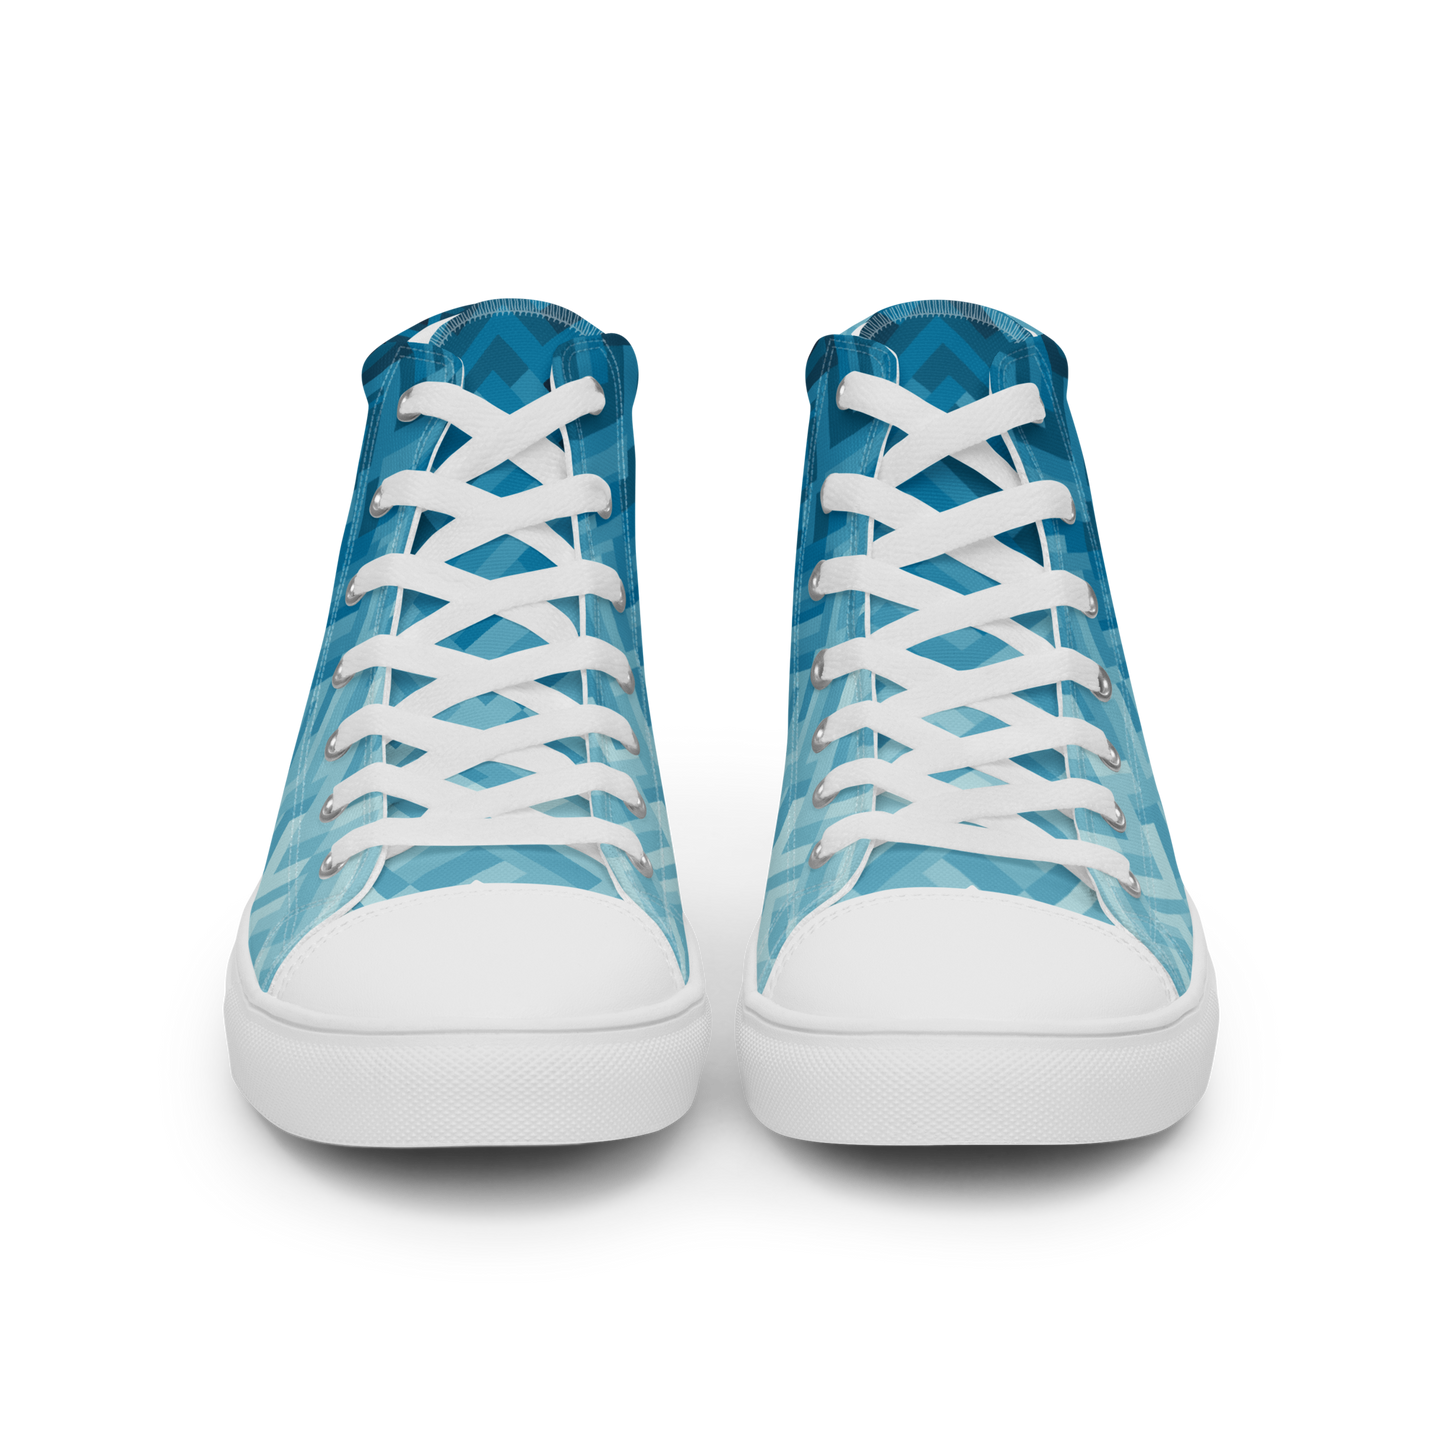 Women's Canvas Sneakers ❯ Polygonal Gradient ❯ Celestial Blue